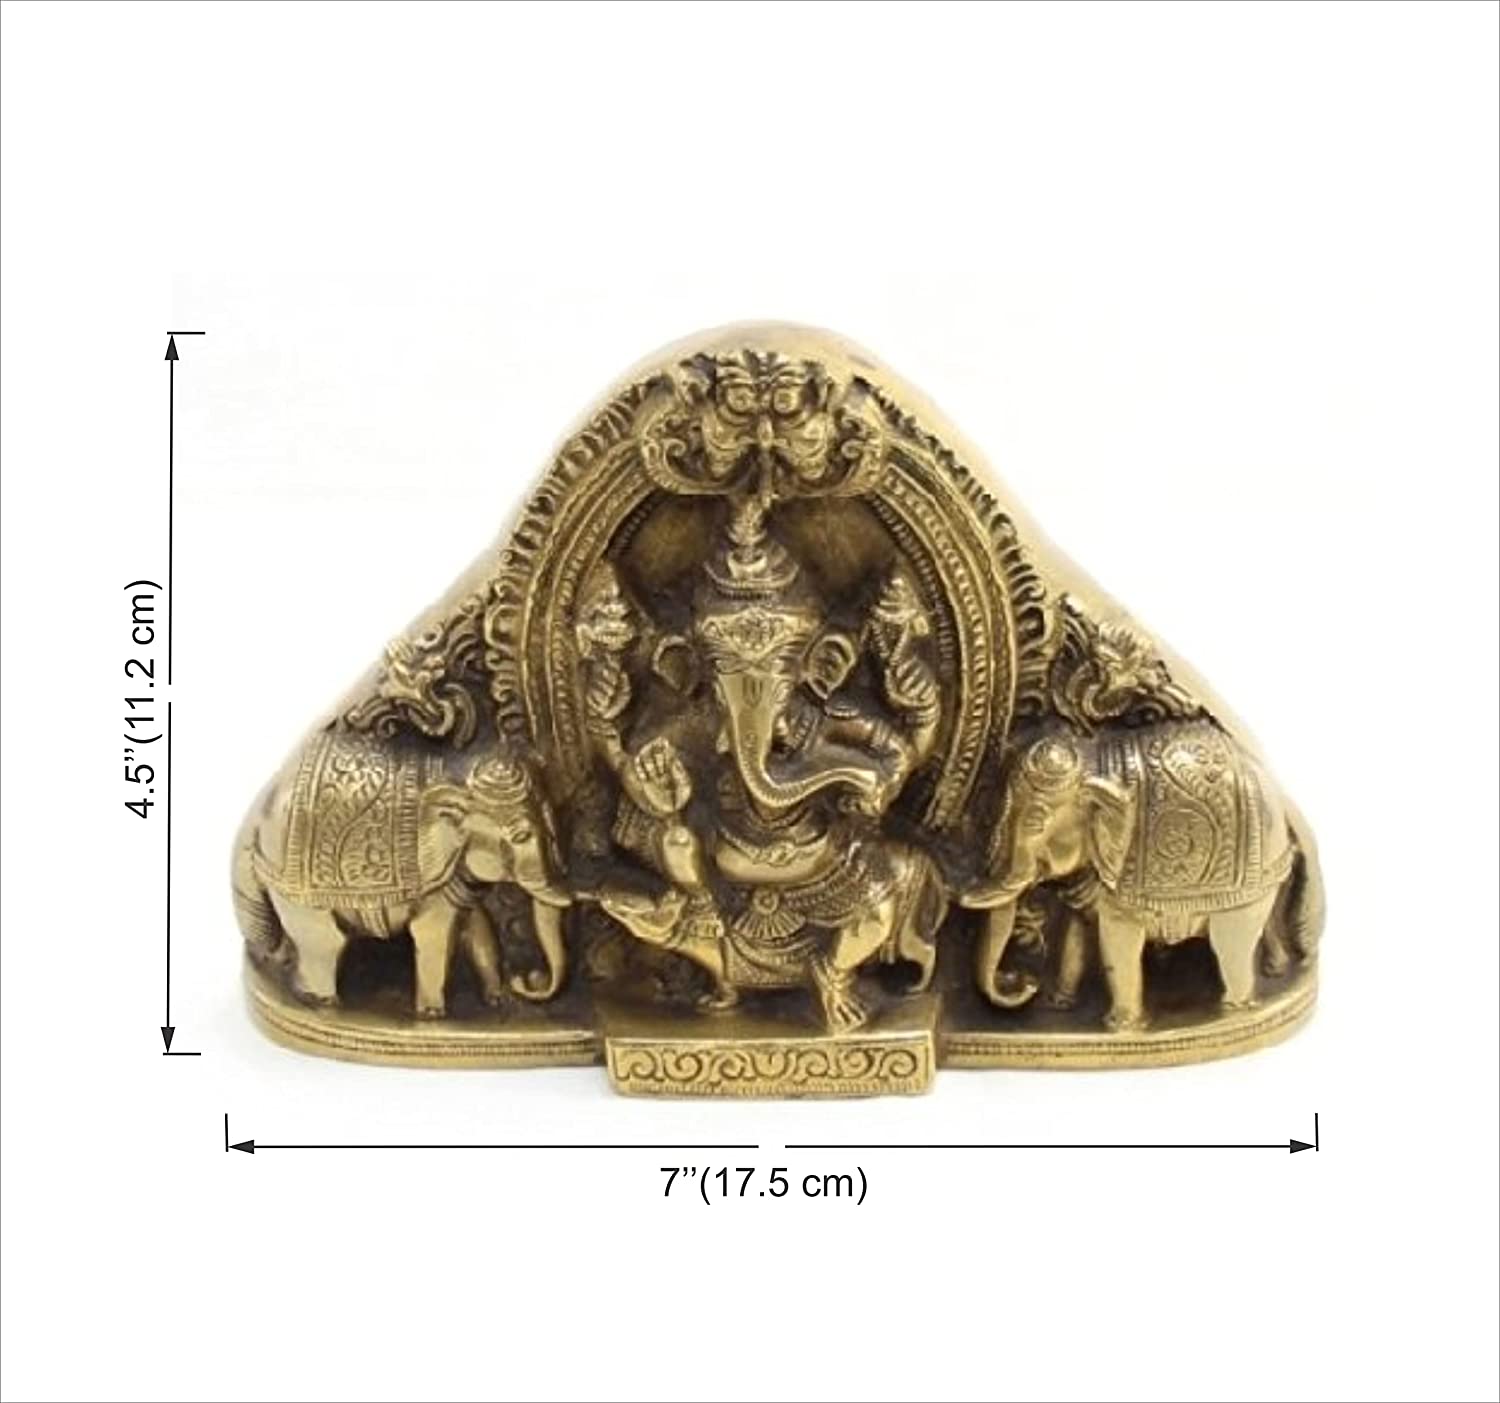 Brass Gaja Ganesha Idol - Lord Ganesha with Elephants (Standard Size, Beige, Brown)